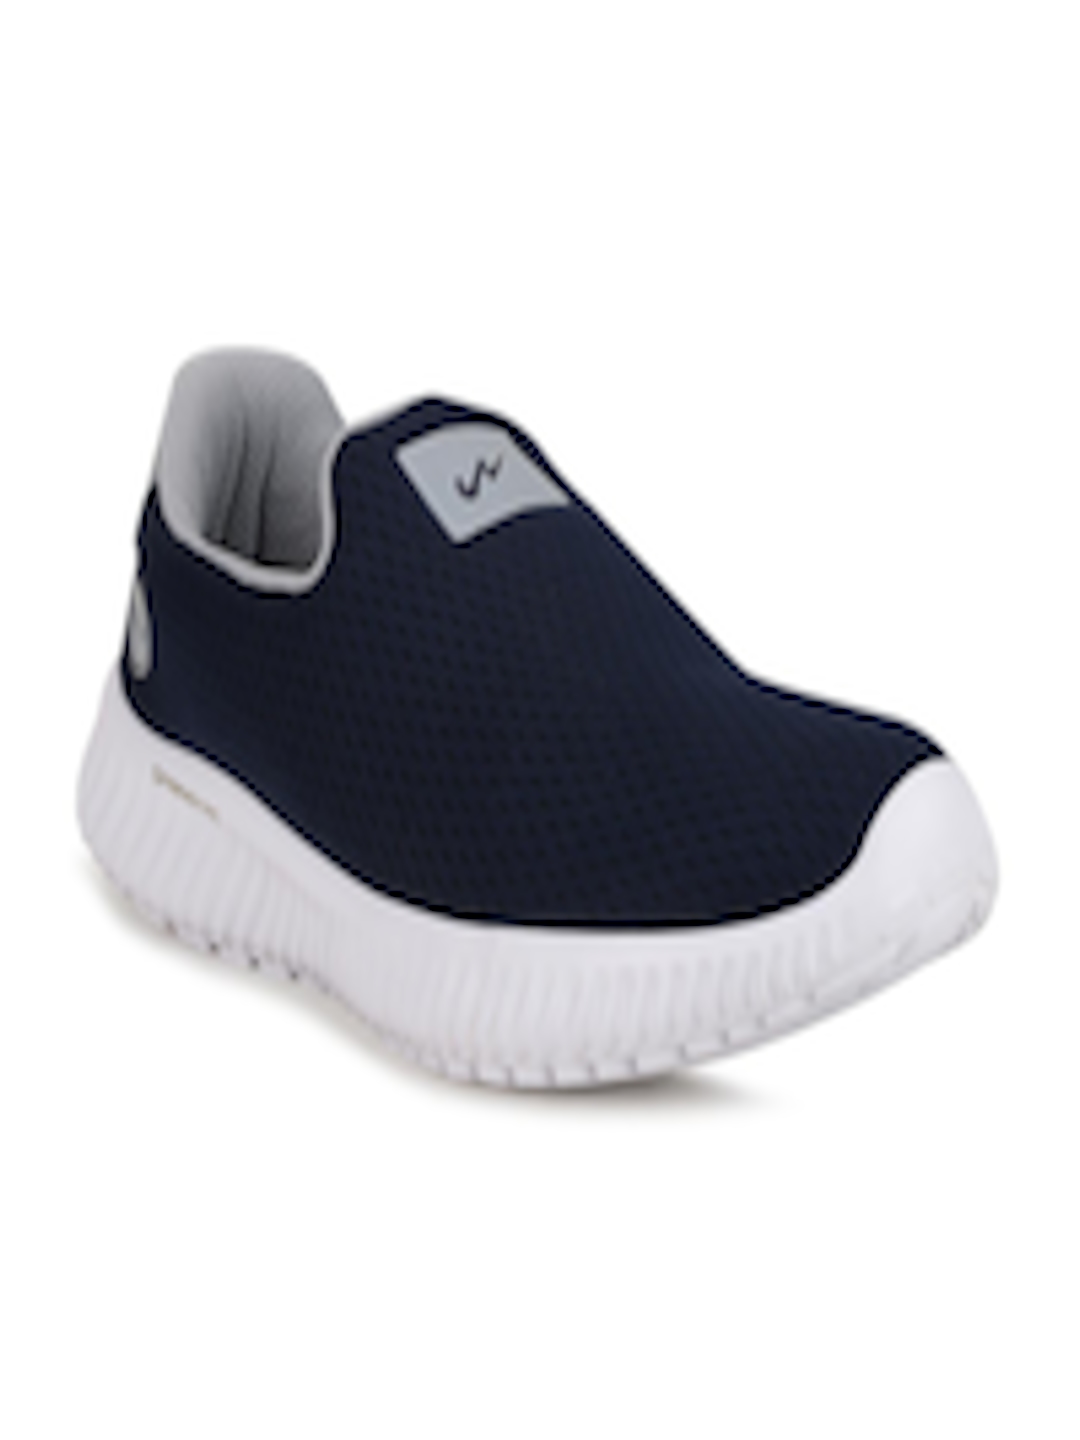 Buy Campus Men Navy Blue Mesh Walking Shoes - Sports Shoes for Men ...